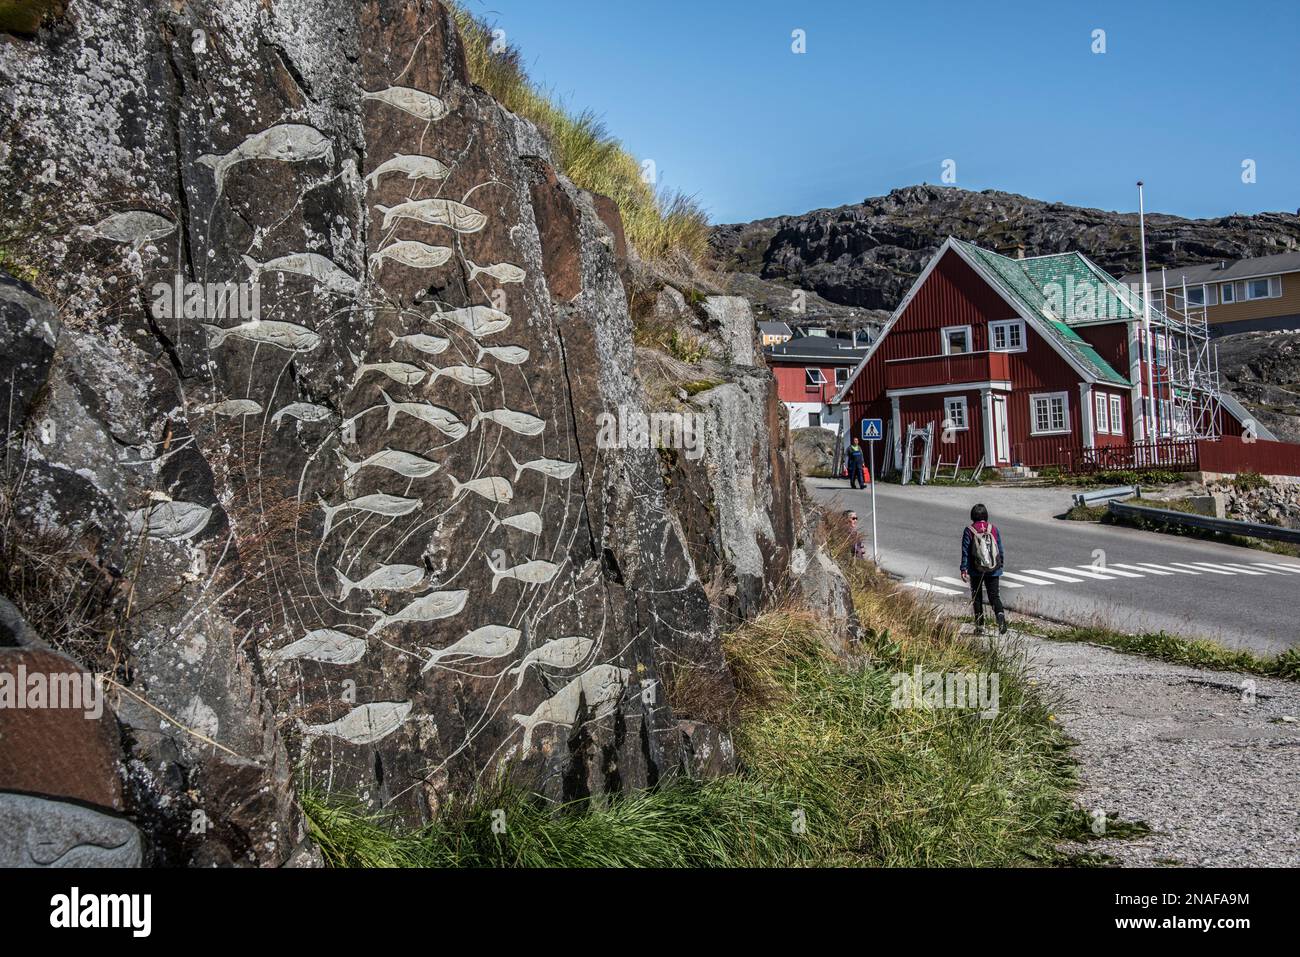 Dessin de poisson sculpté dans un rocher dans la ville groenlandaise de Qaqortoq ; Qaqortoq, Groenland Banque D'Images